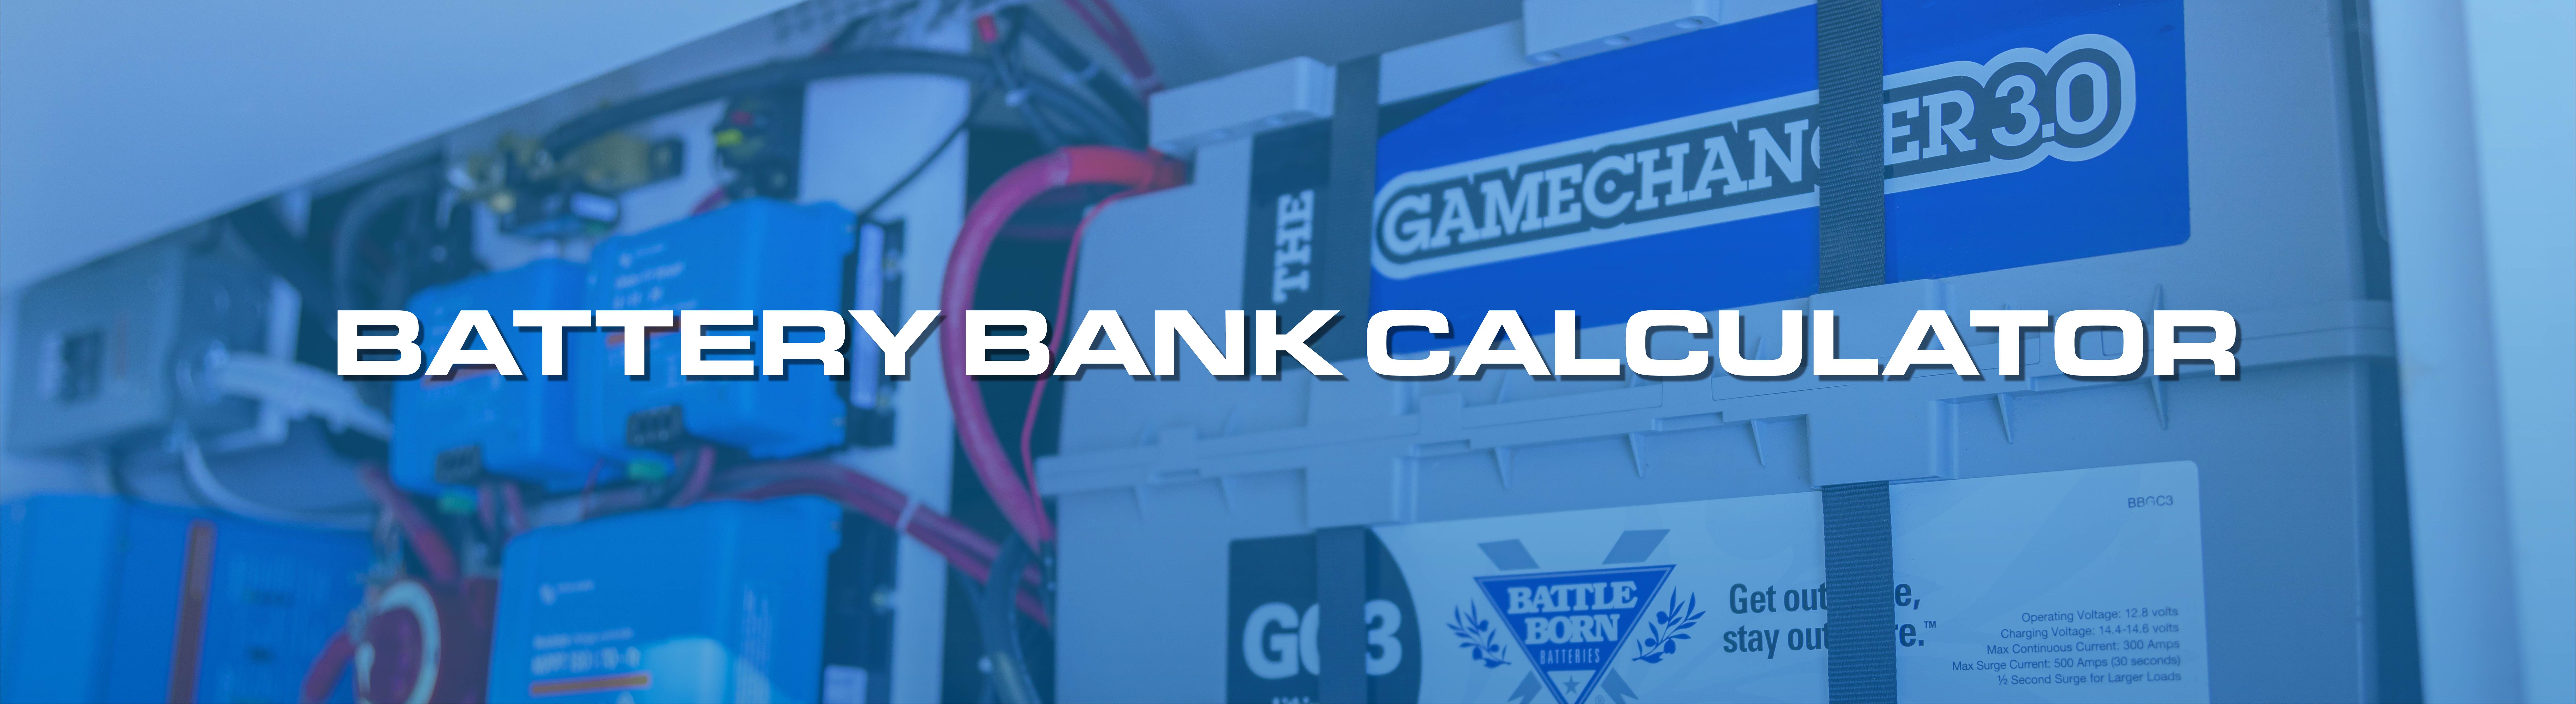 Battery Bank Calculator